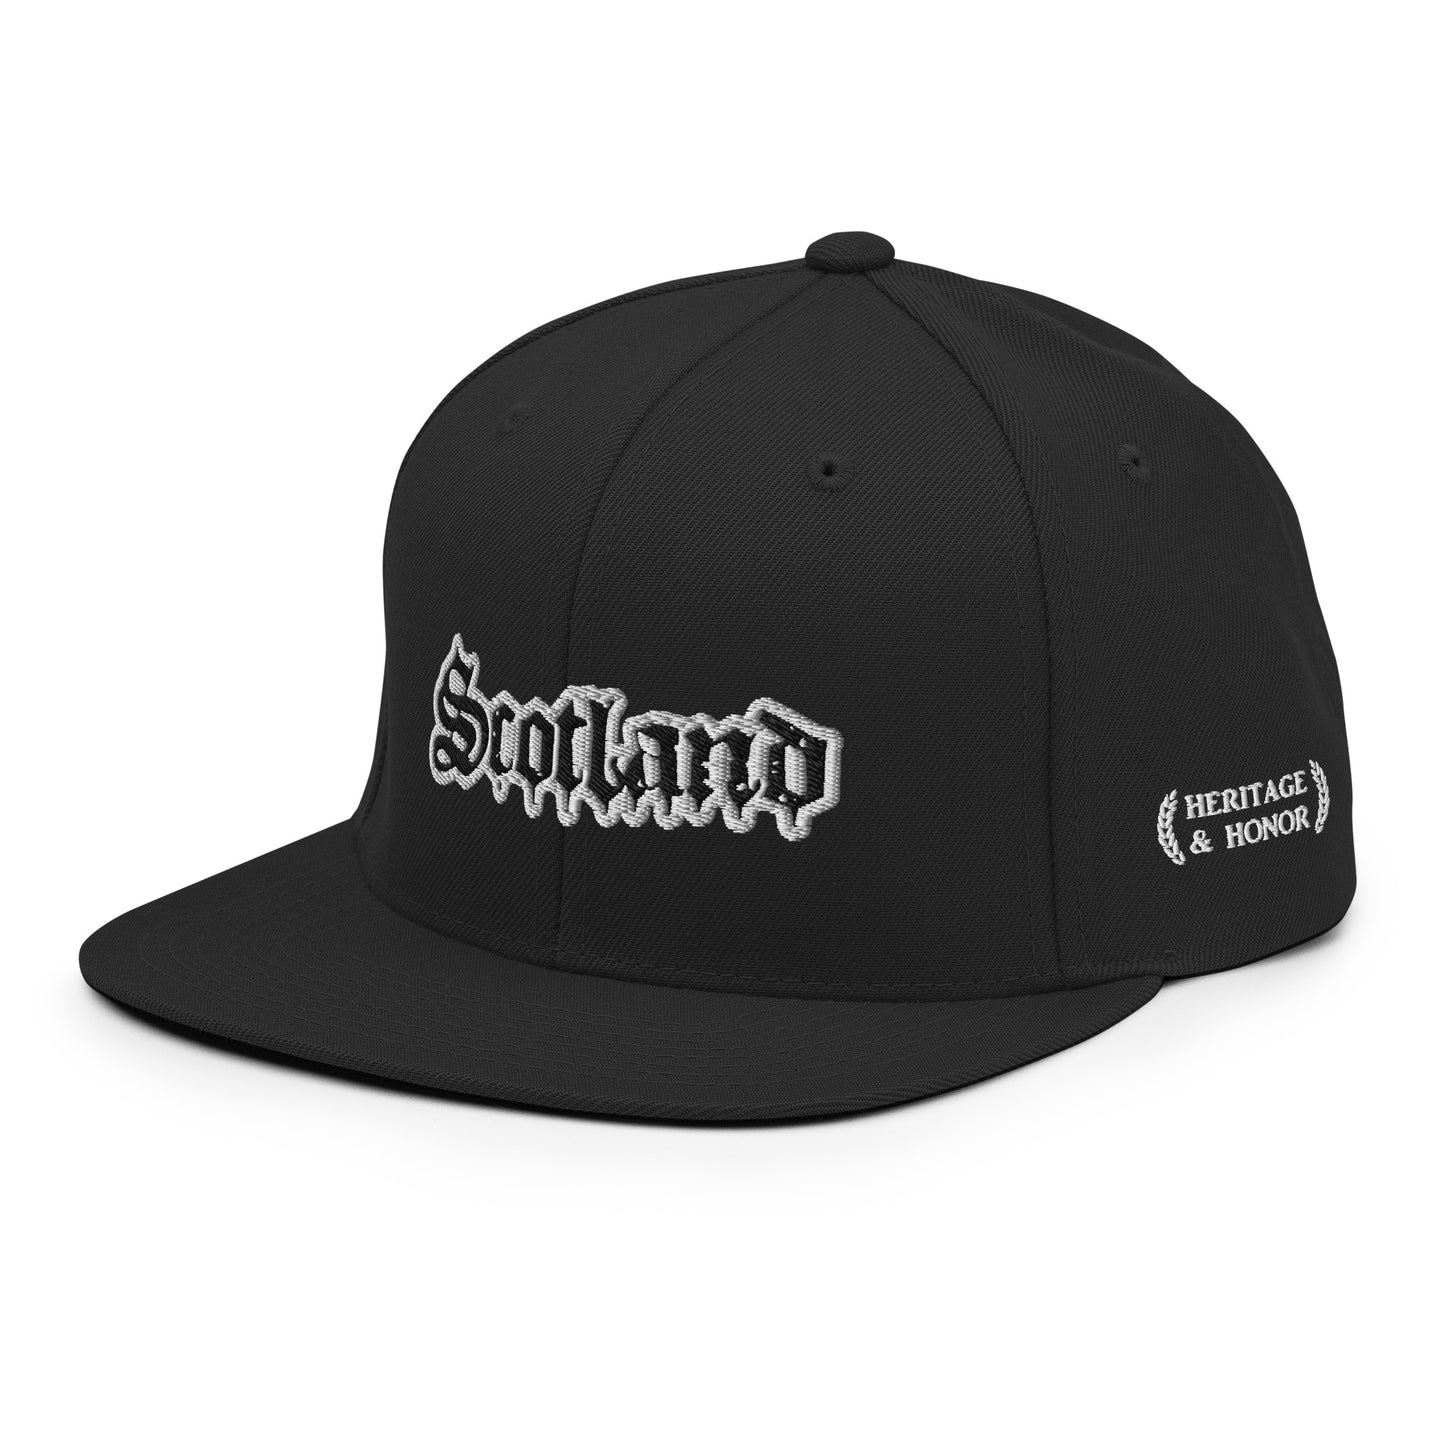 Heritage & Honor Snapback Cap 'Scotland'